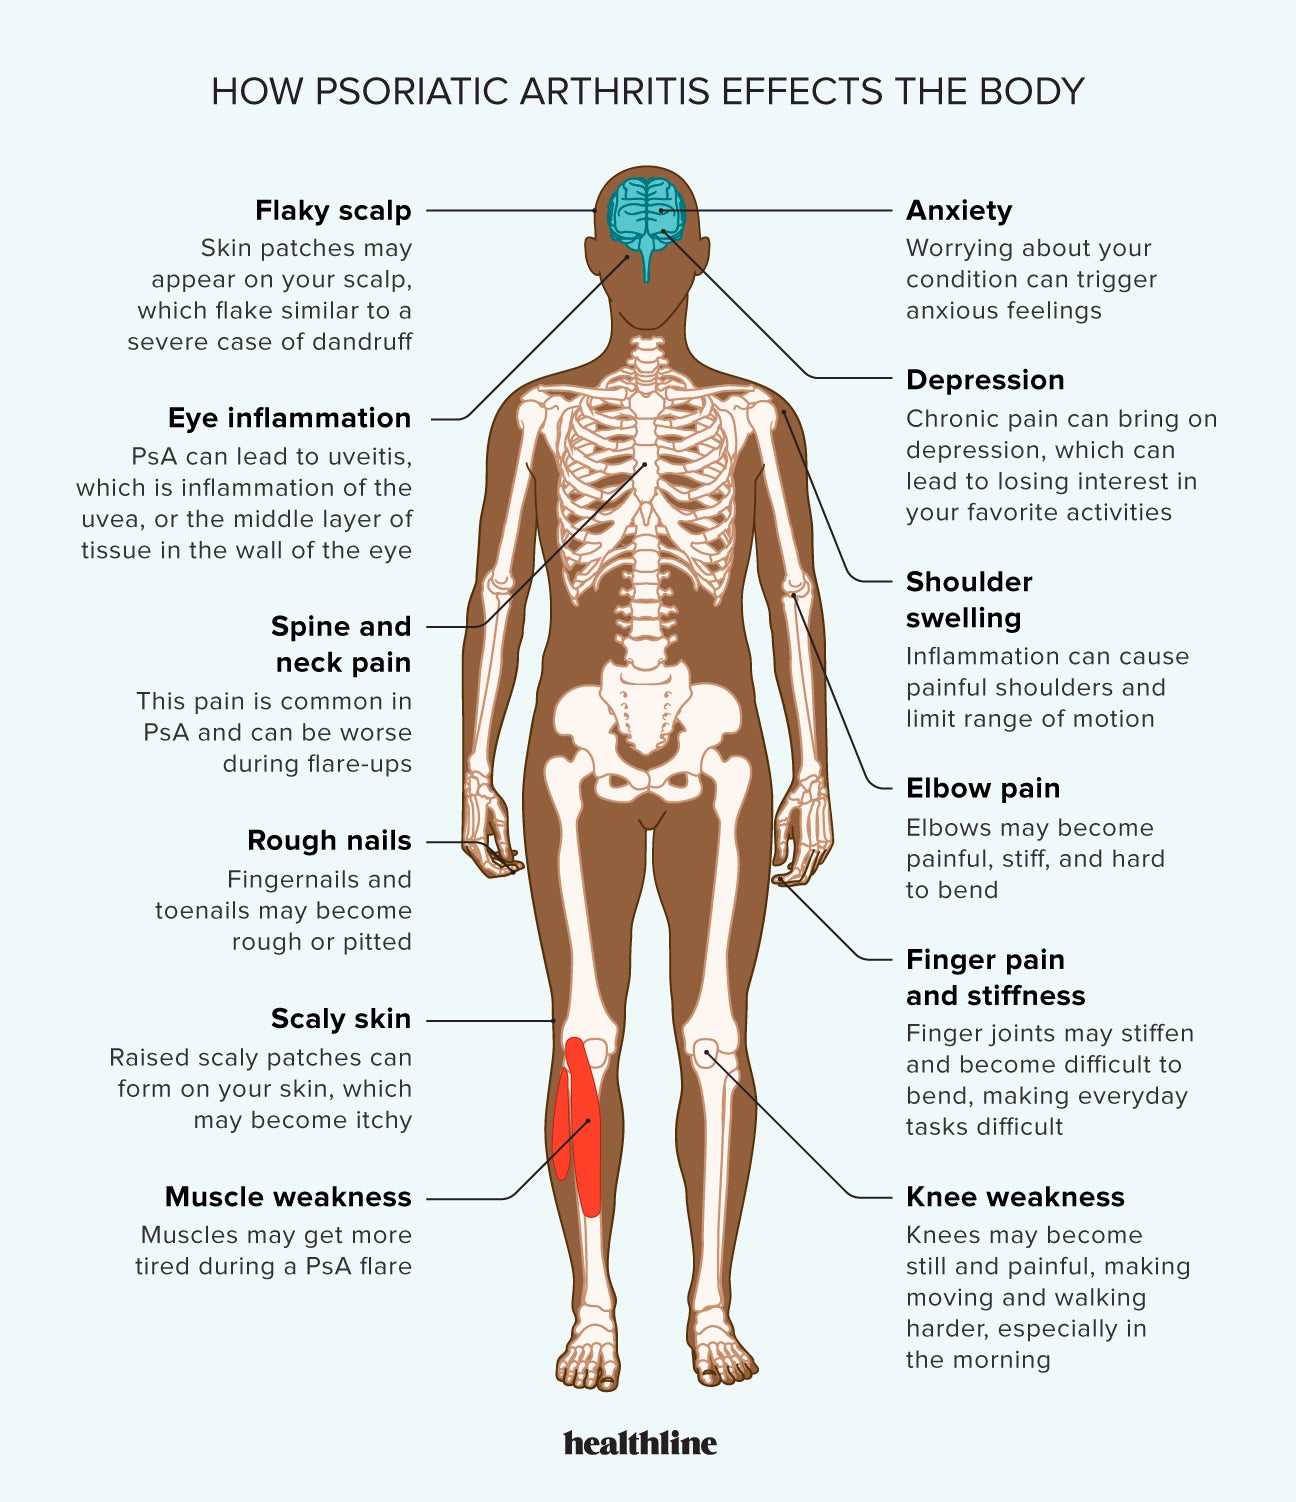 Arthritis, Definition, Causes, & Treatment